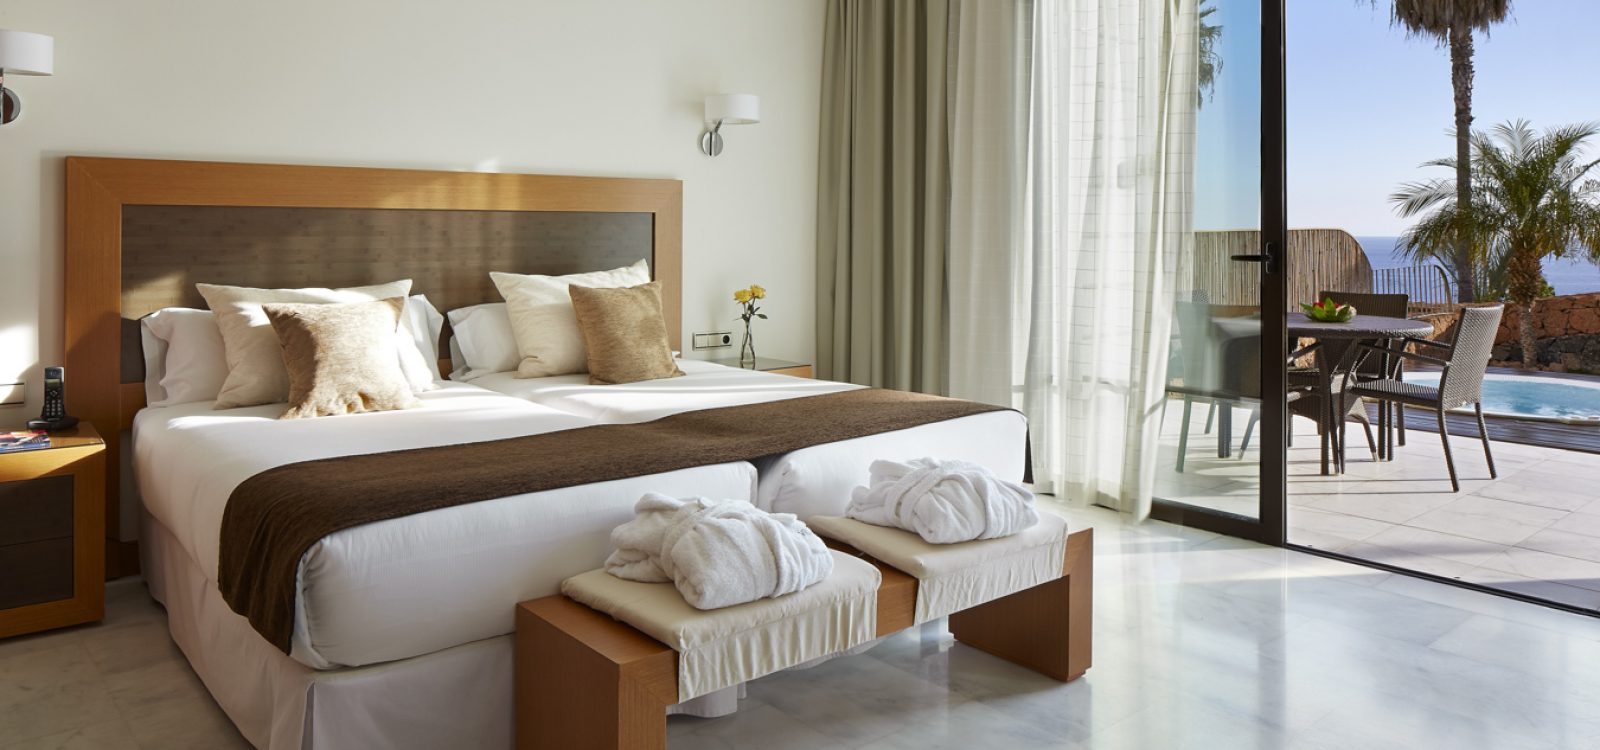 Hotel Suite Villa María-HOTEL SUITE VILLA MARIA - 2 bedroom villa with jacuzzi-WEB